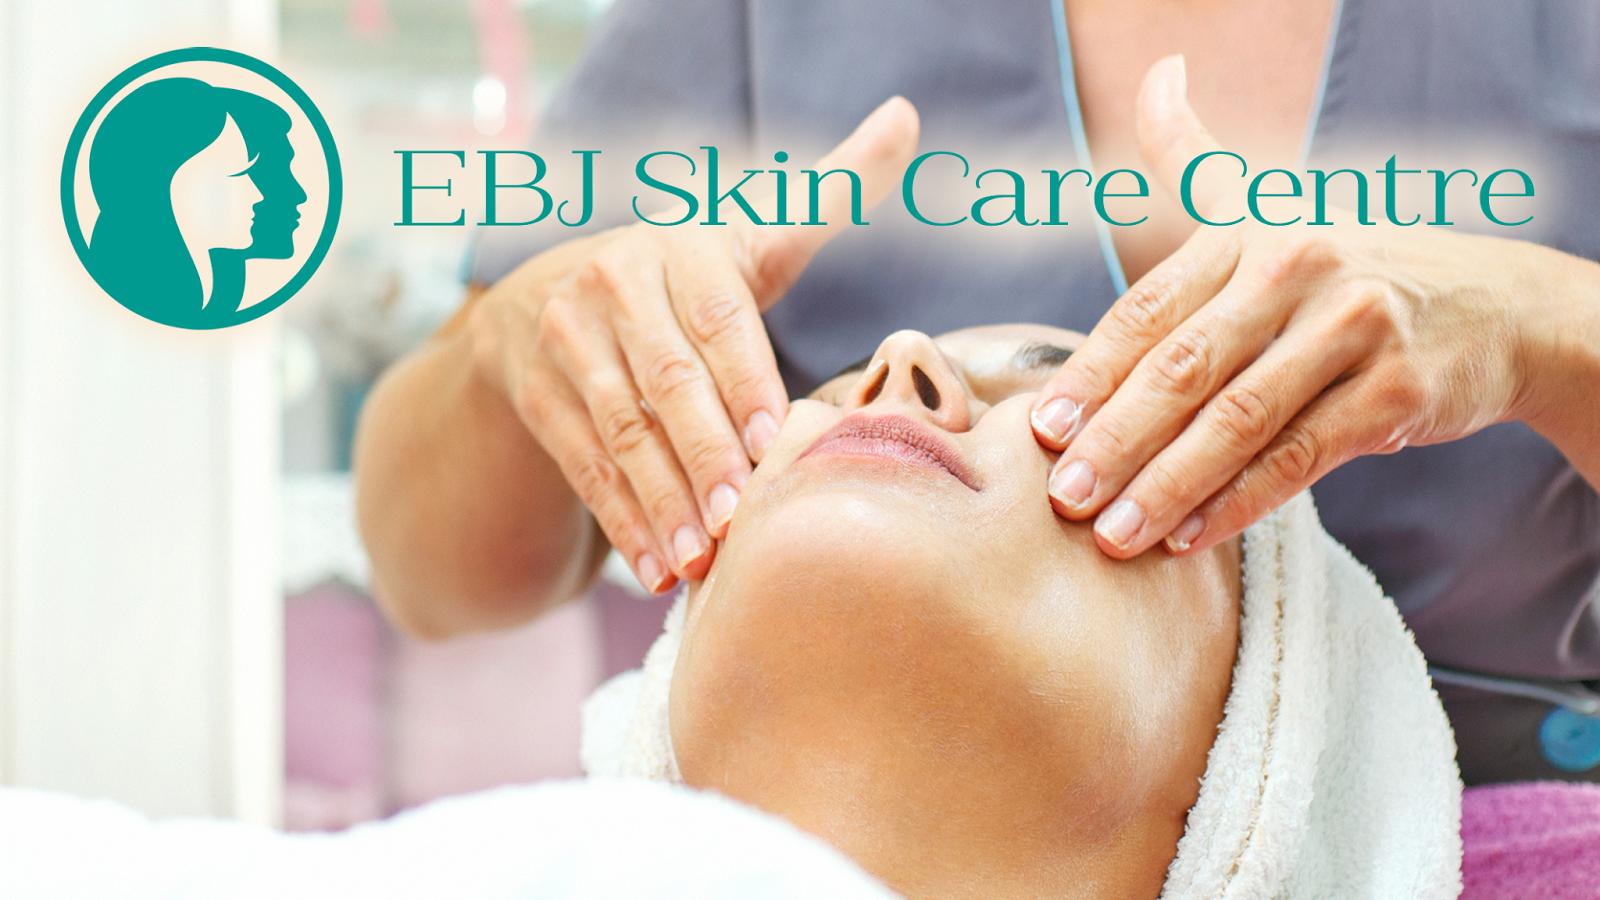 Photo of EBJ Skin Care Centre in Malverne City, New York, United States - 1 Picture of Point of interest, Establishment, Health, Spa, Beauty salon